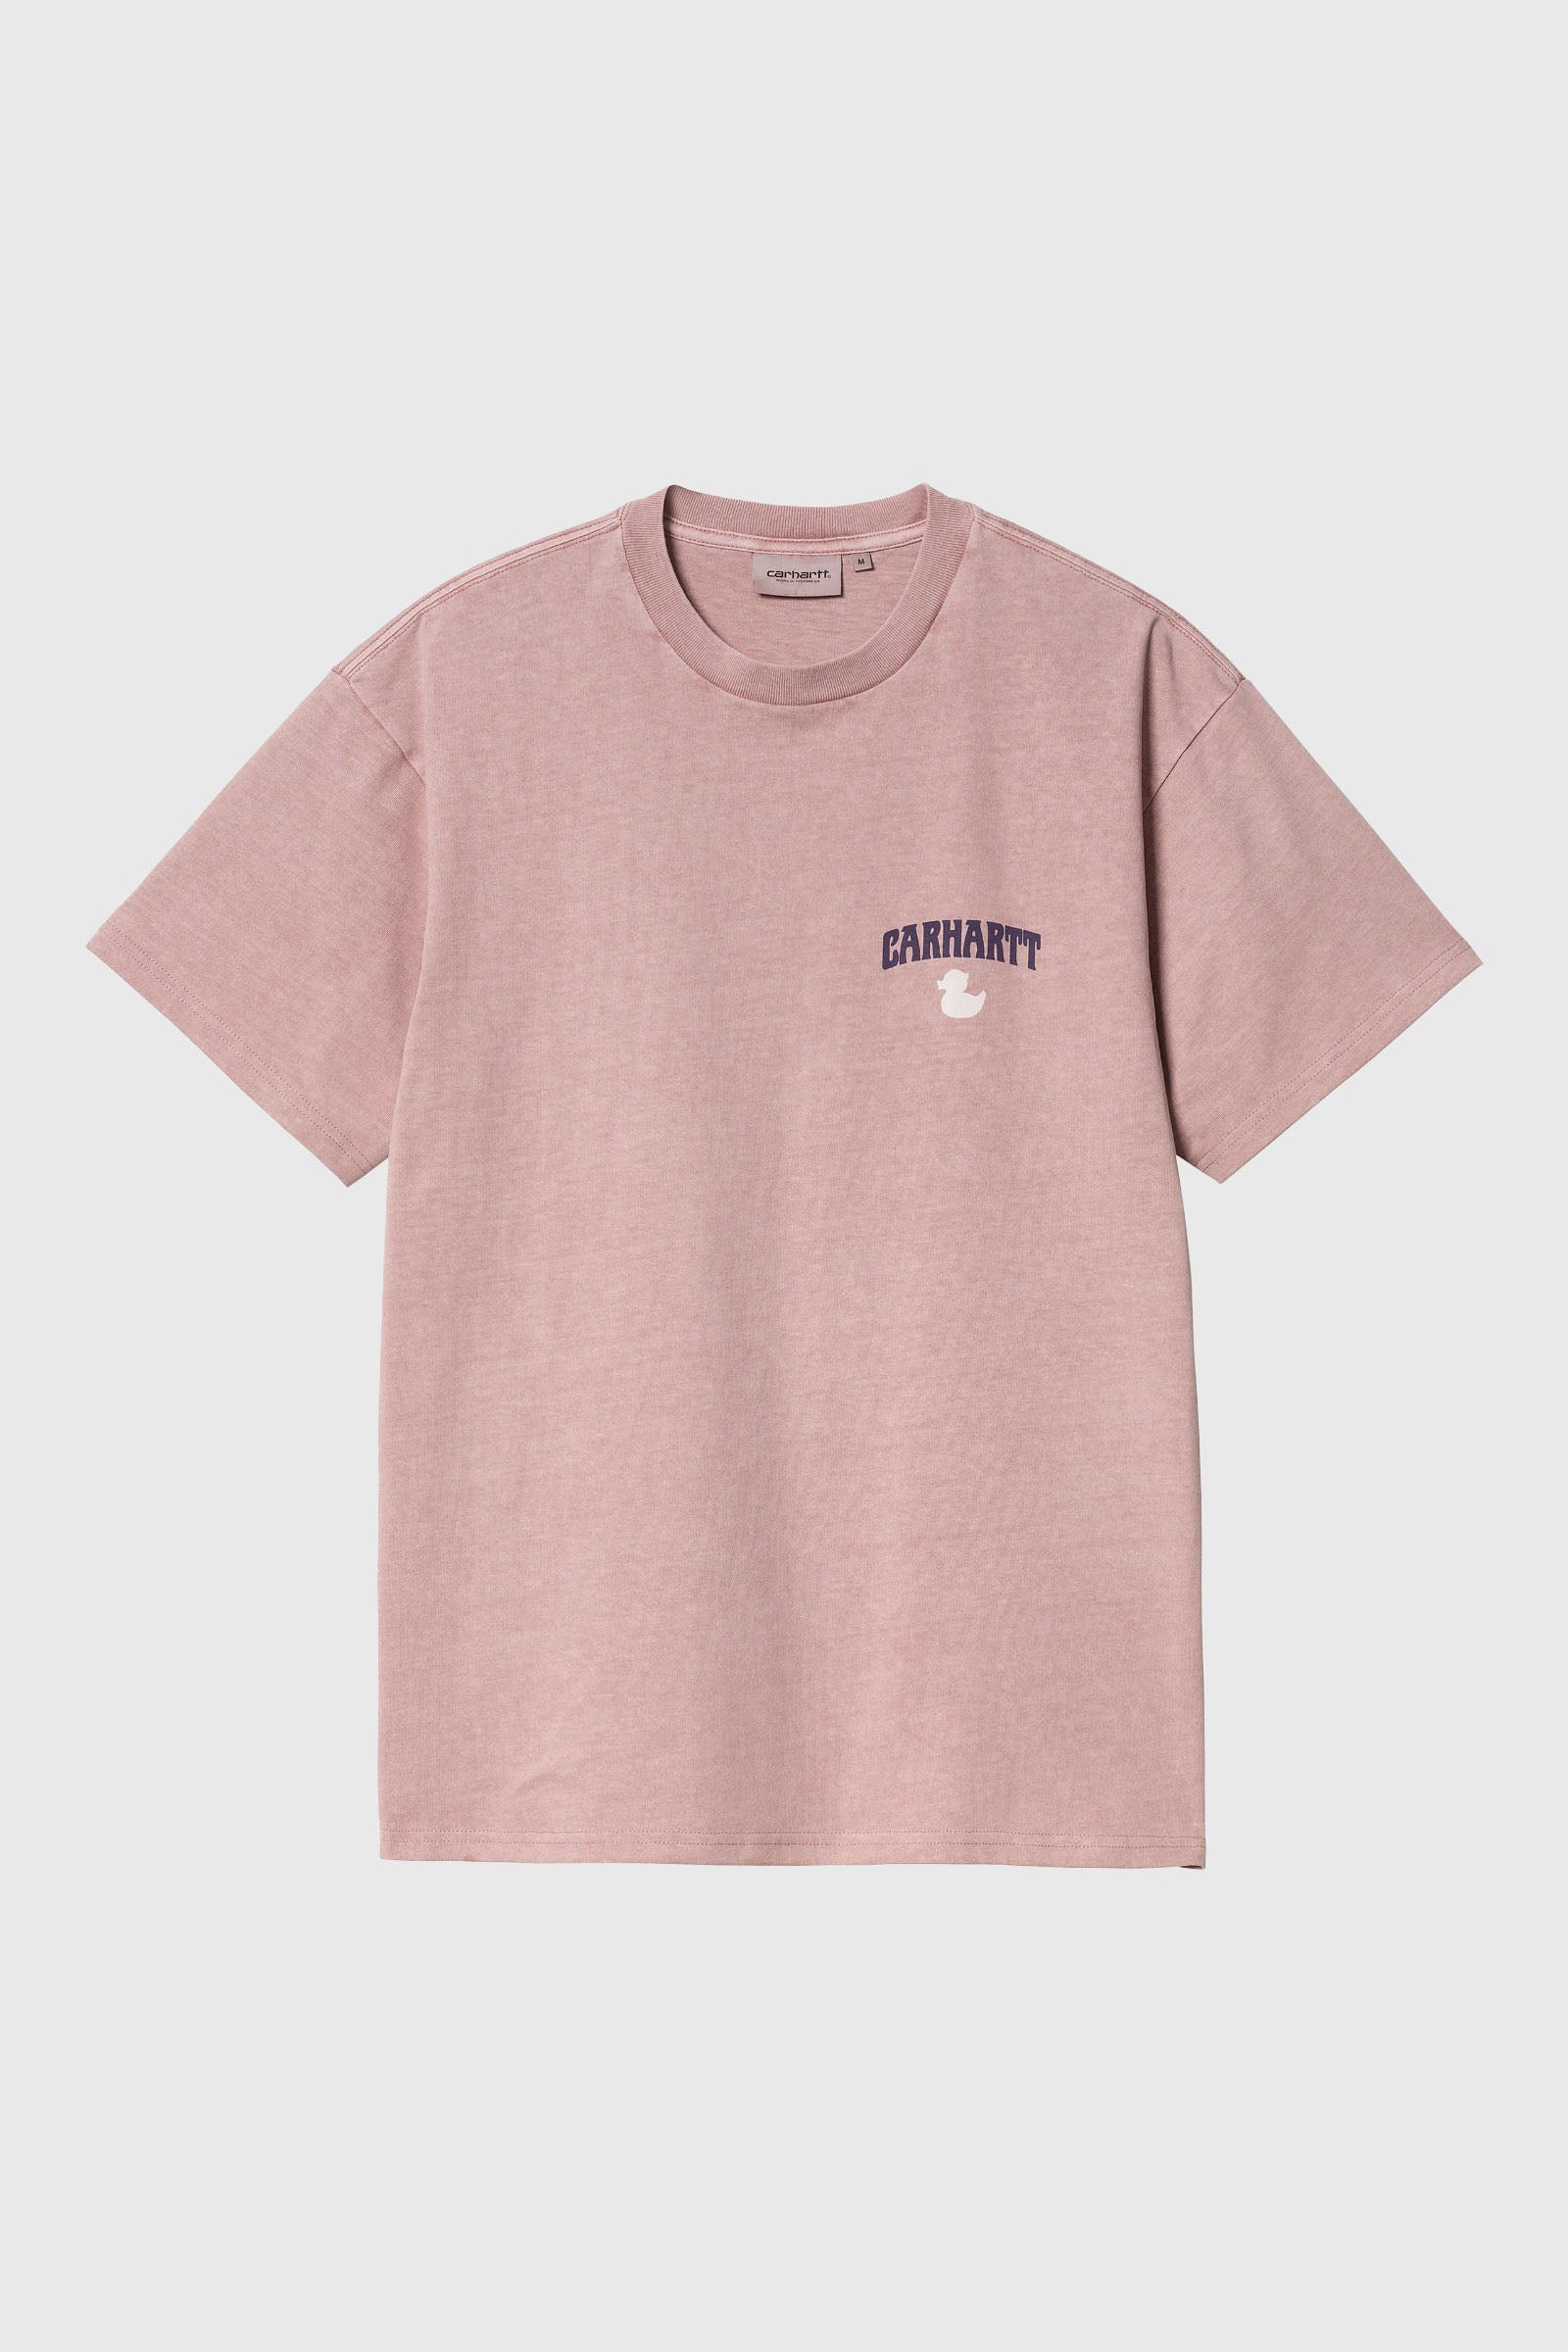 Carhartt Wip T-shirt Short Sleeve Duckin' Rosa Antico Uomo - 4